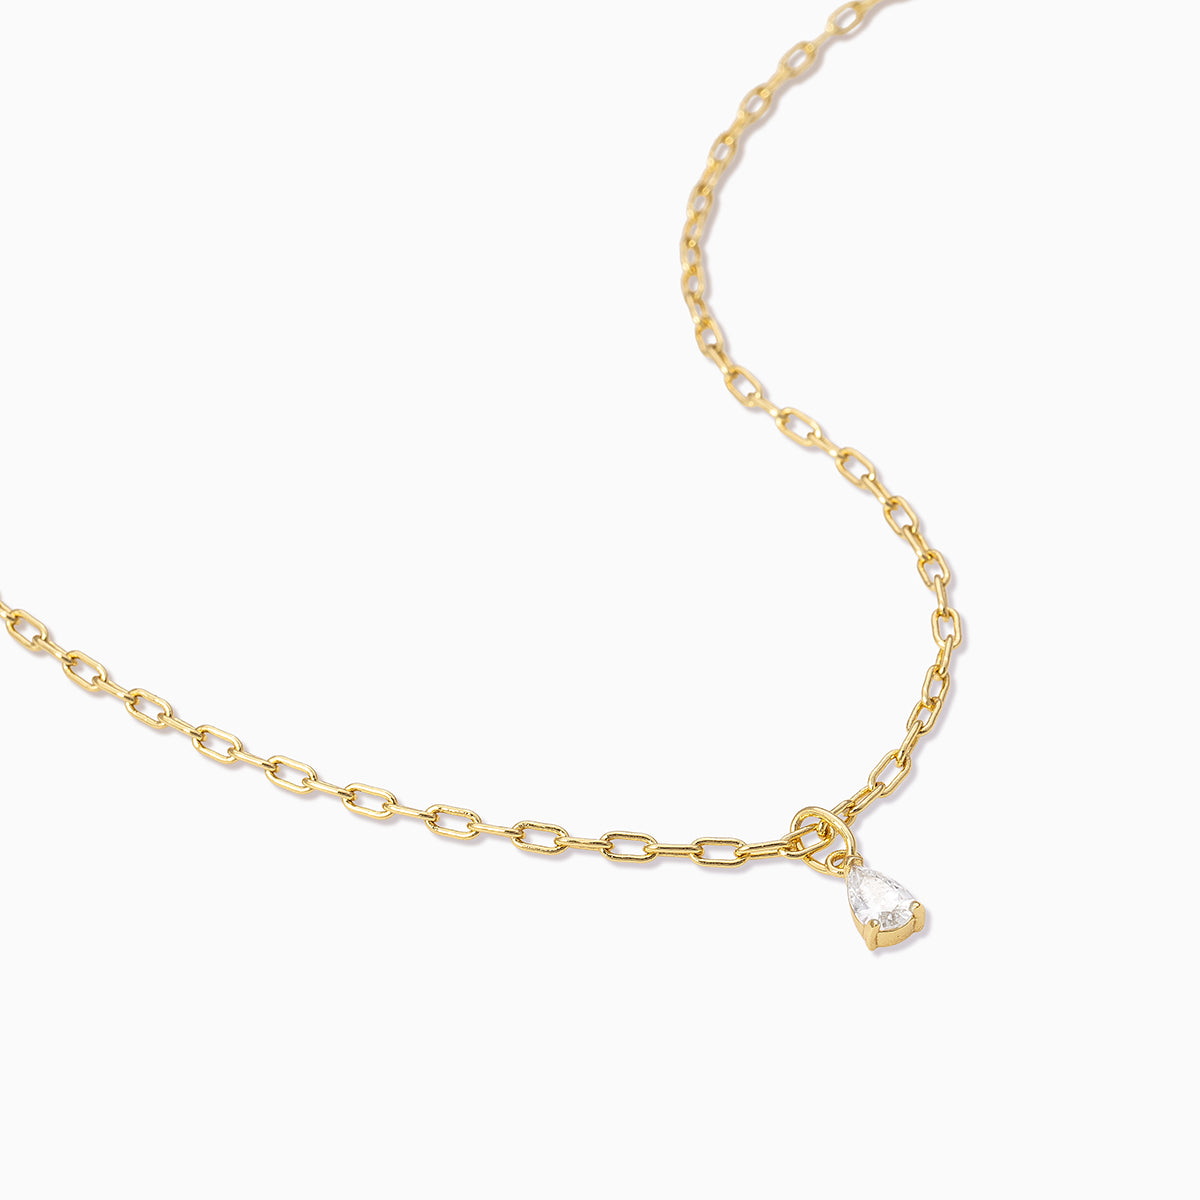 Teardrop Pendant Necklace | Gold | Product Detail Image | Uncommon James